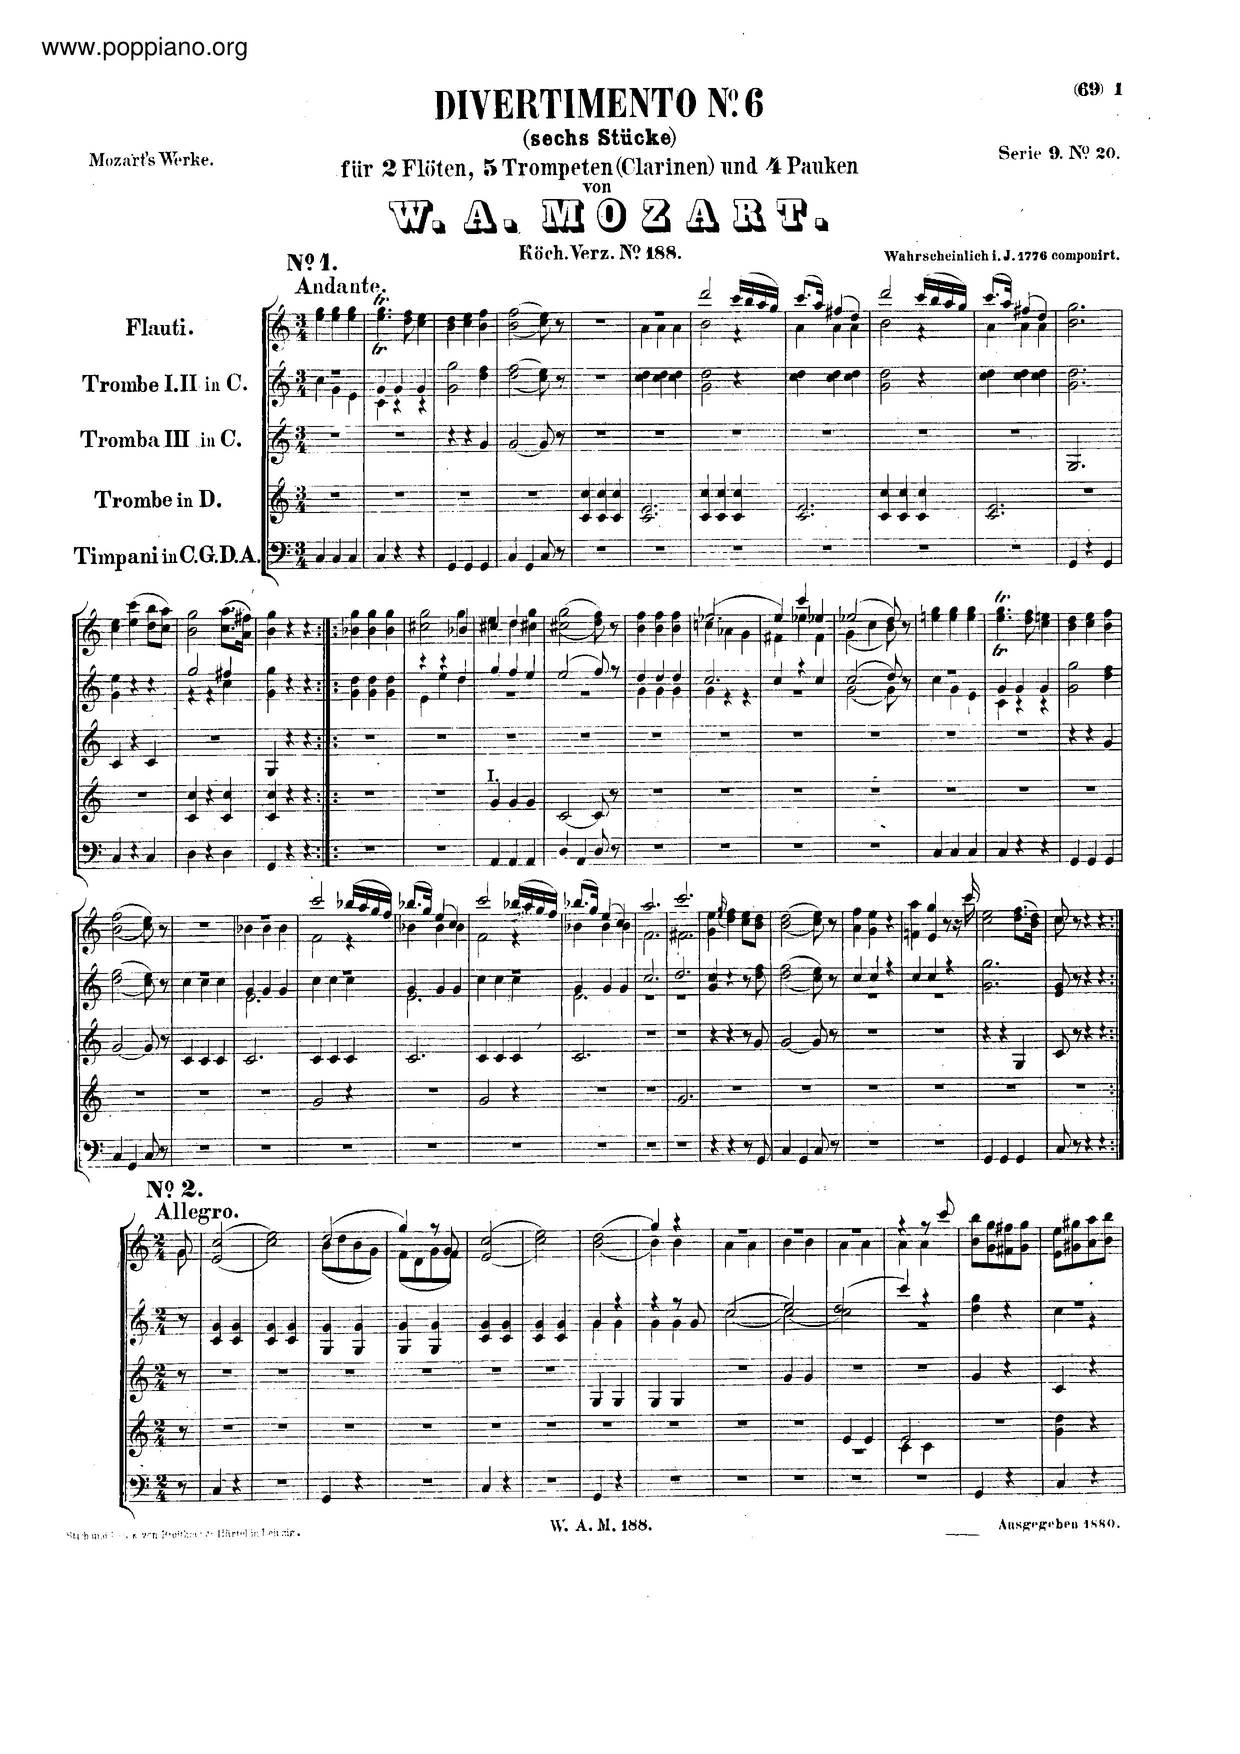 Divertimento In C Major, K. 188/240Bピアノ譜